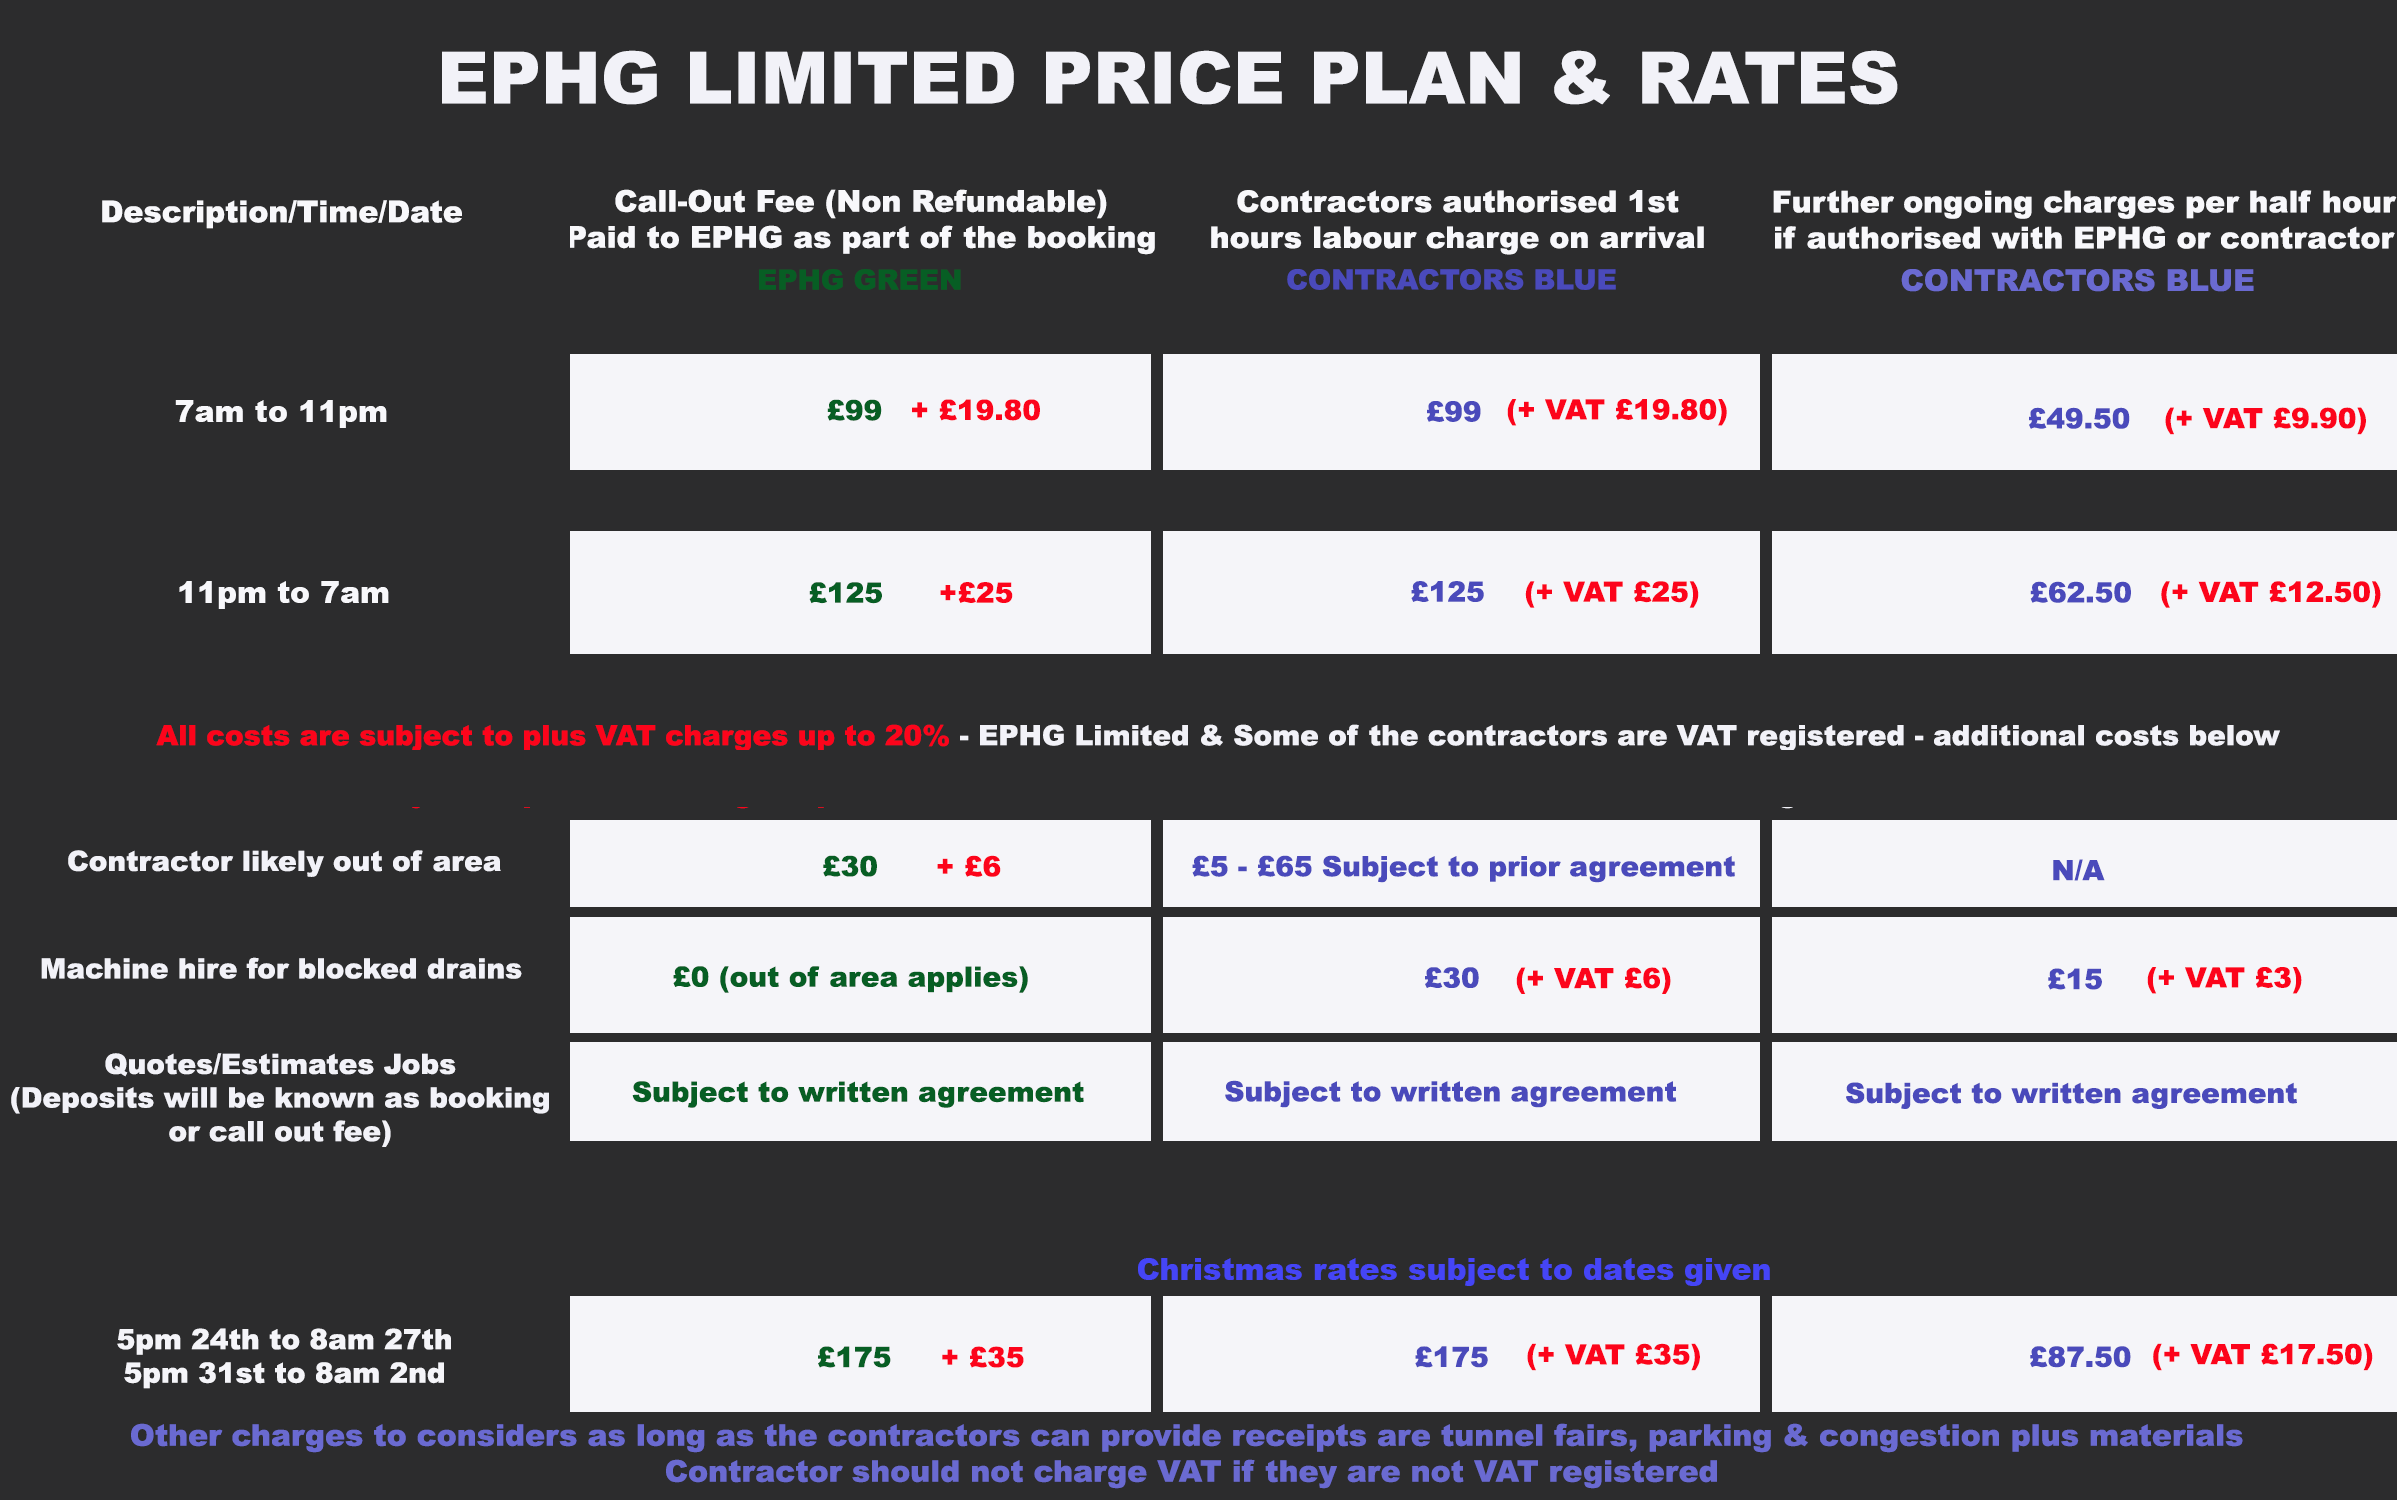 EPHG rates and price plan